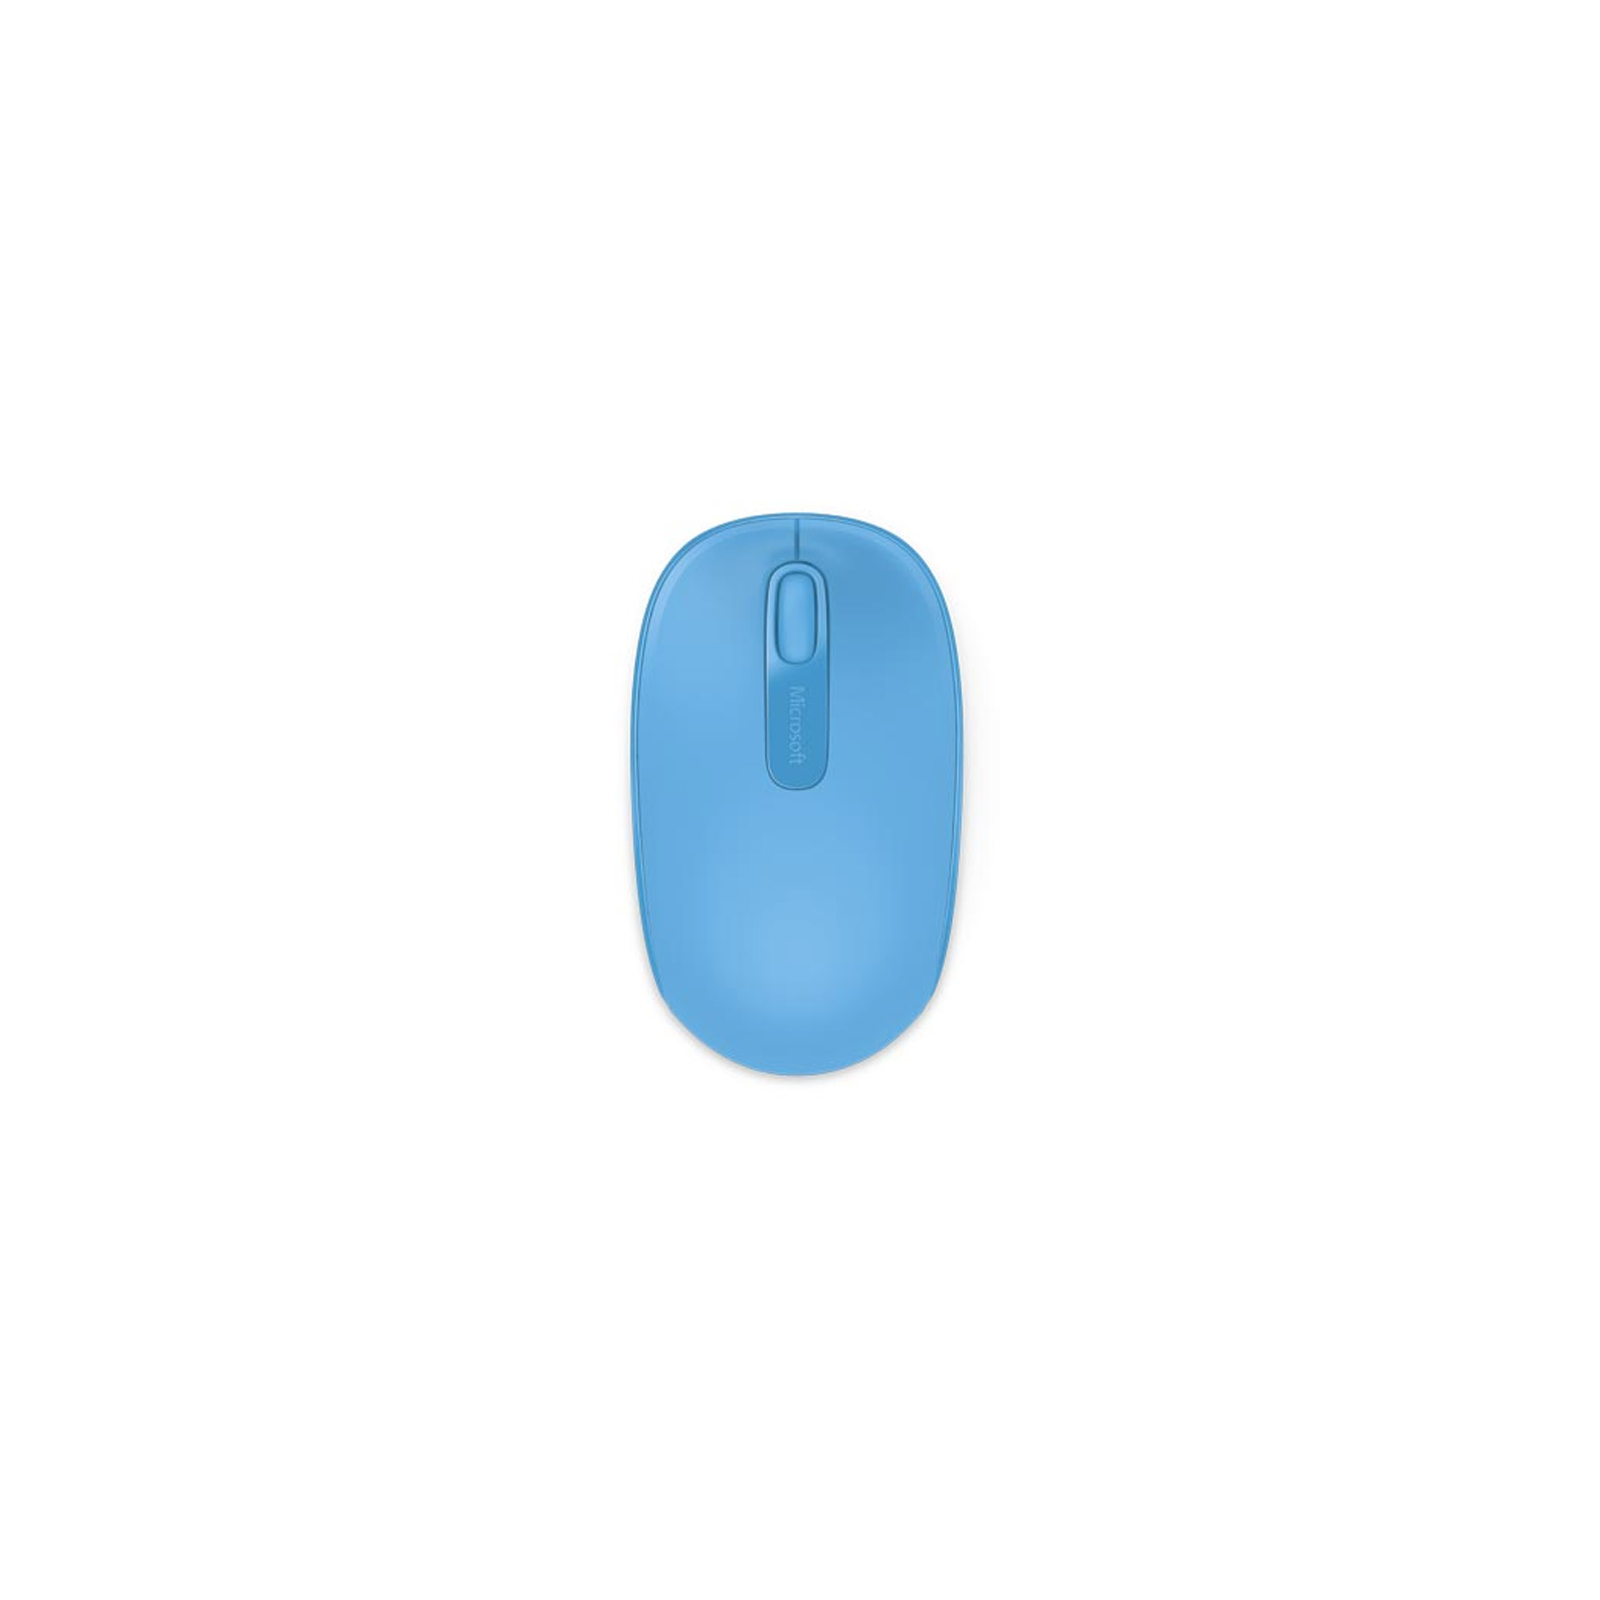 Мышка Microsoft Mobile 1850 Blu (U7Z-00058) изображение 3